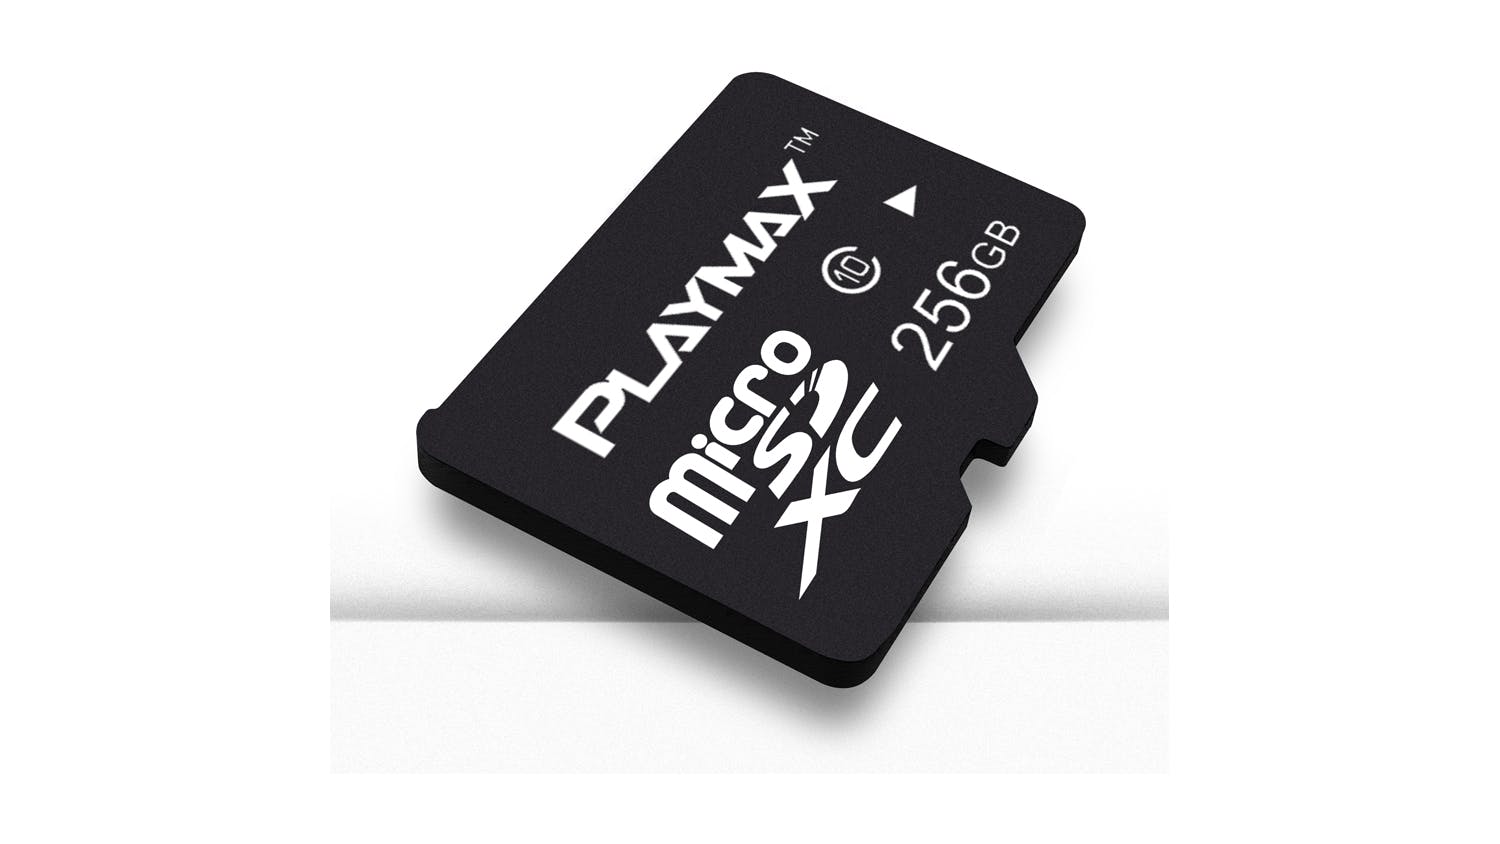 Playmax NSW Memory Card 256GB